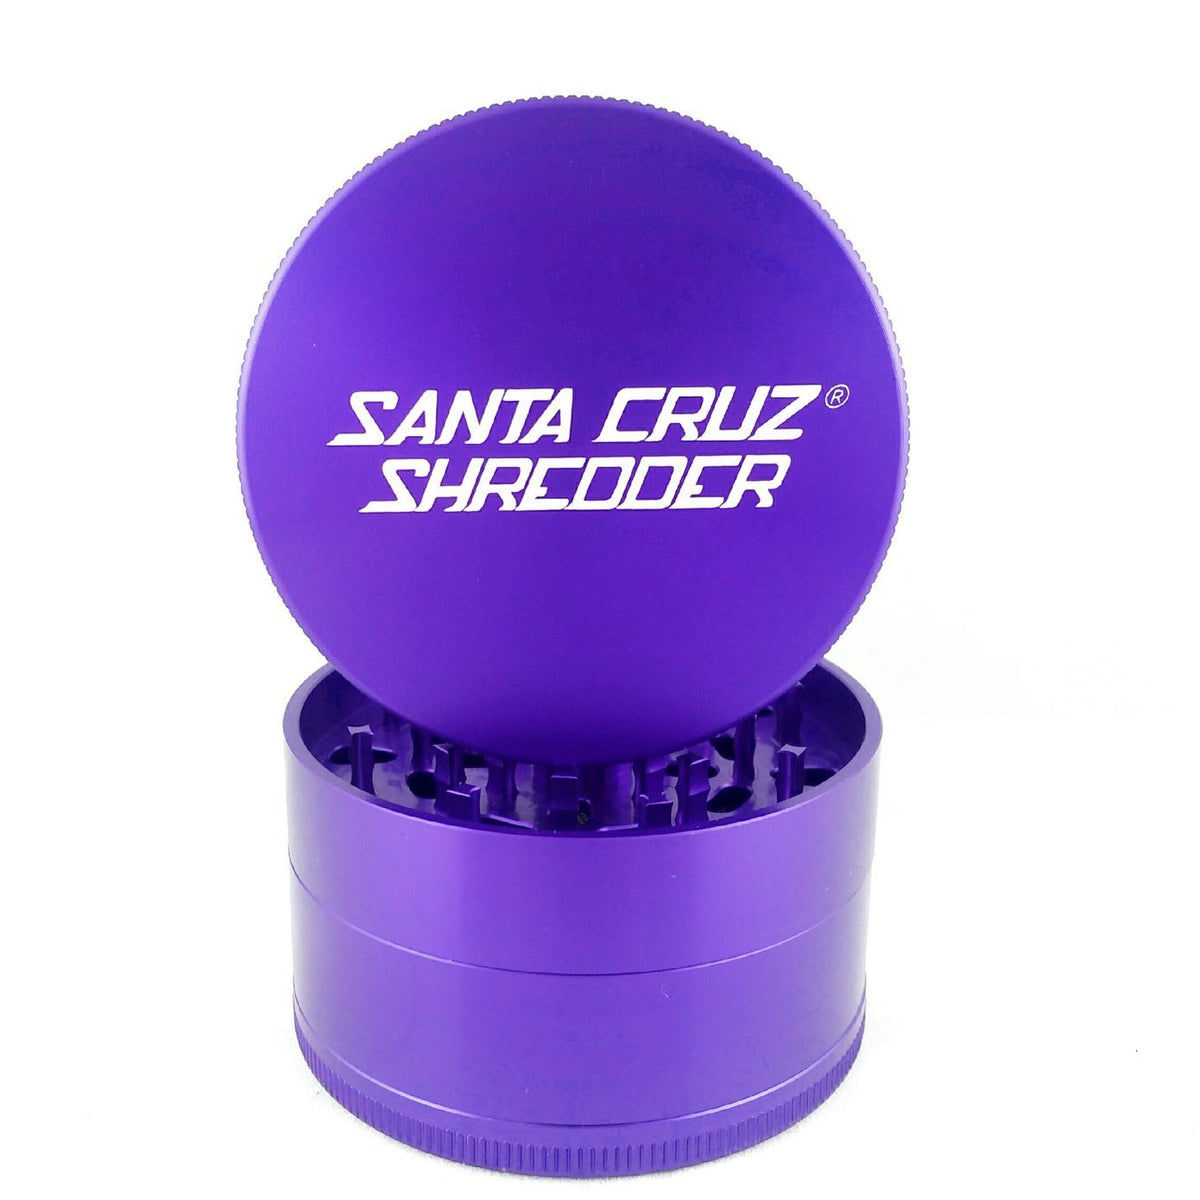 Santa Cruz Shredder 2 Piece Hemp Grinder (Cookies Blue) - Fuzion